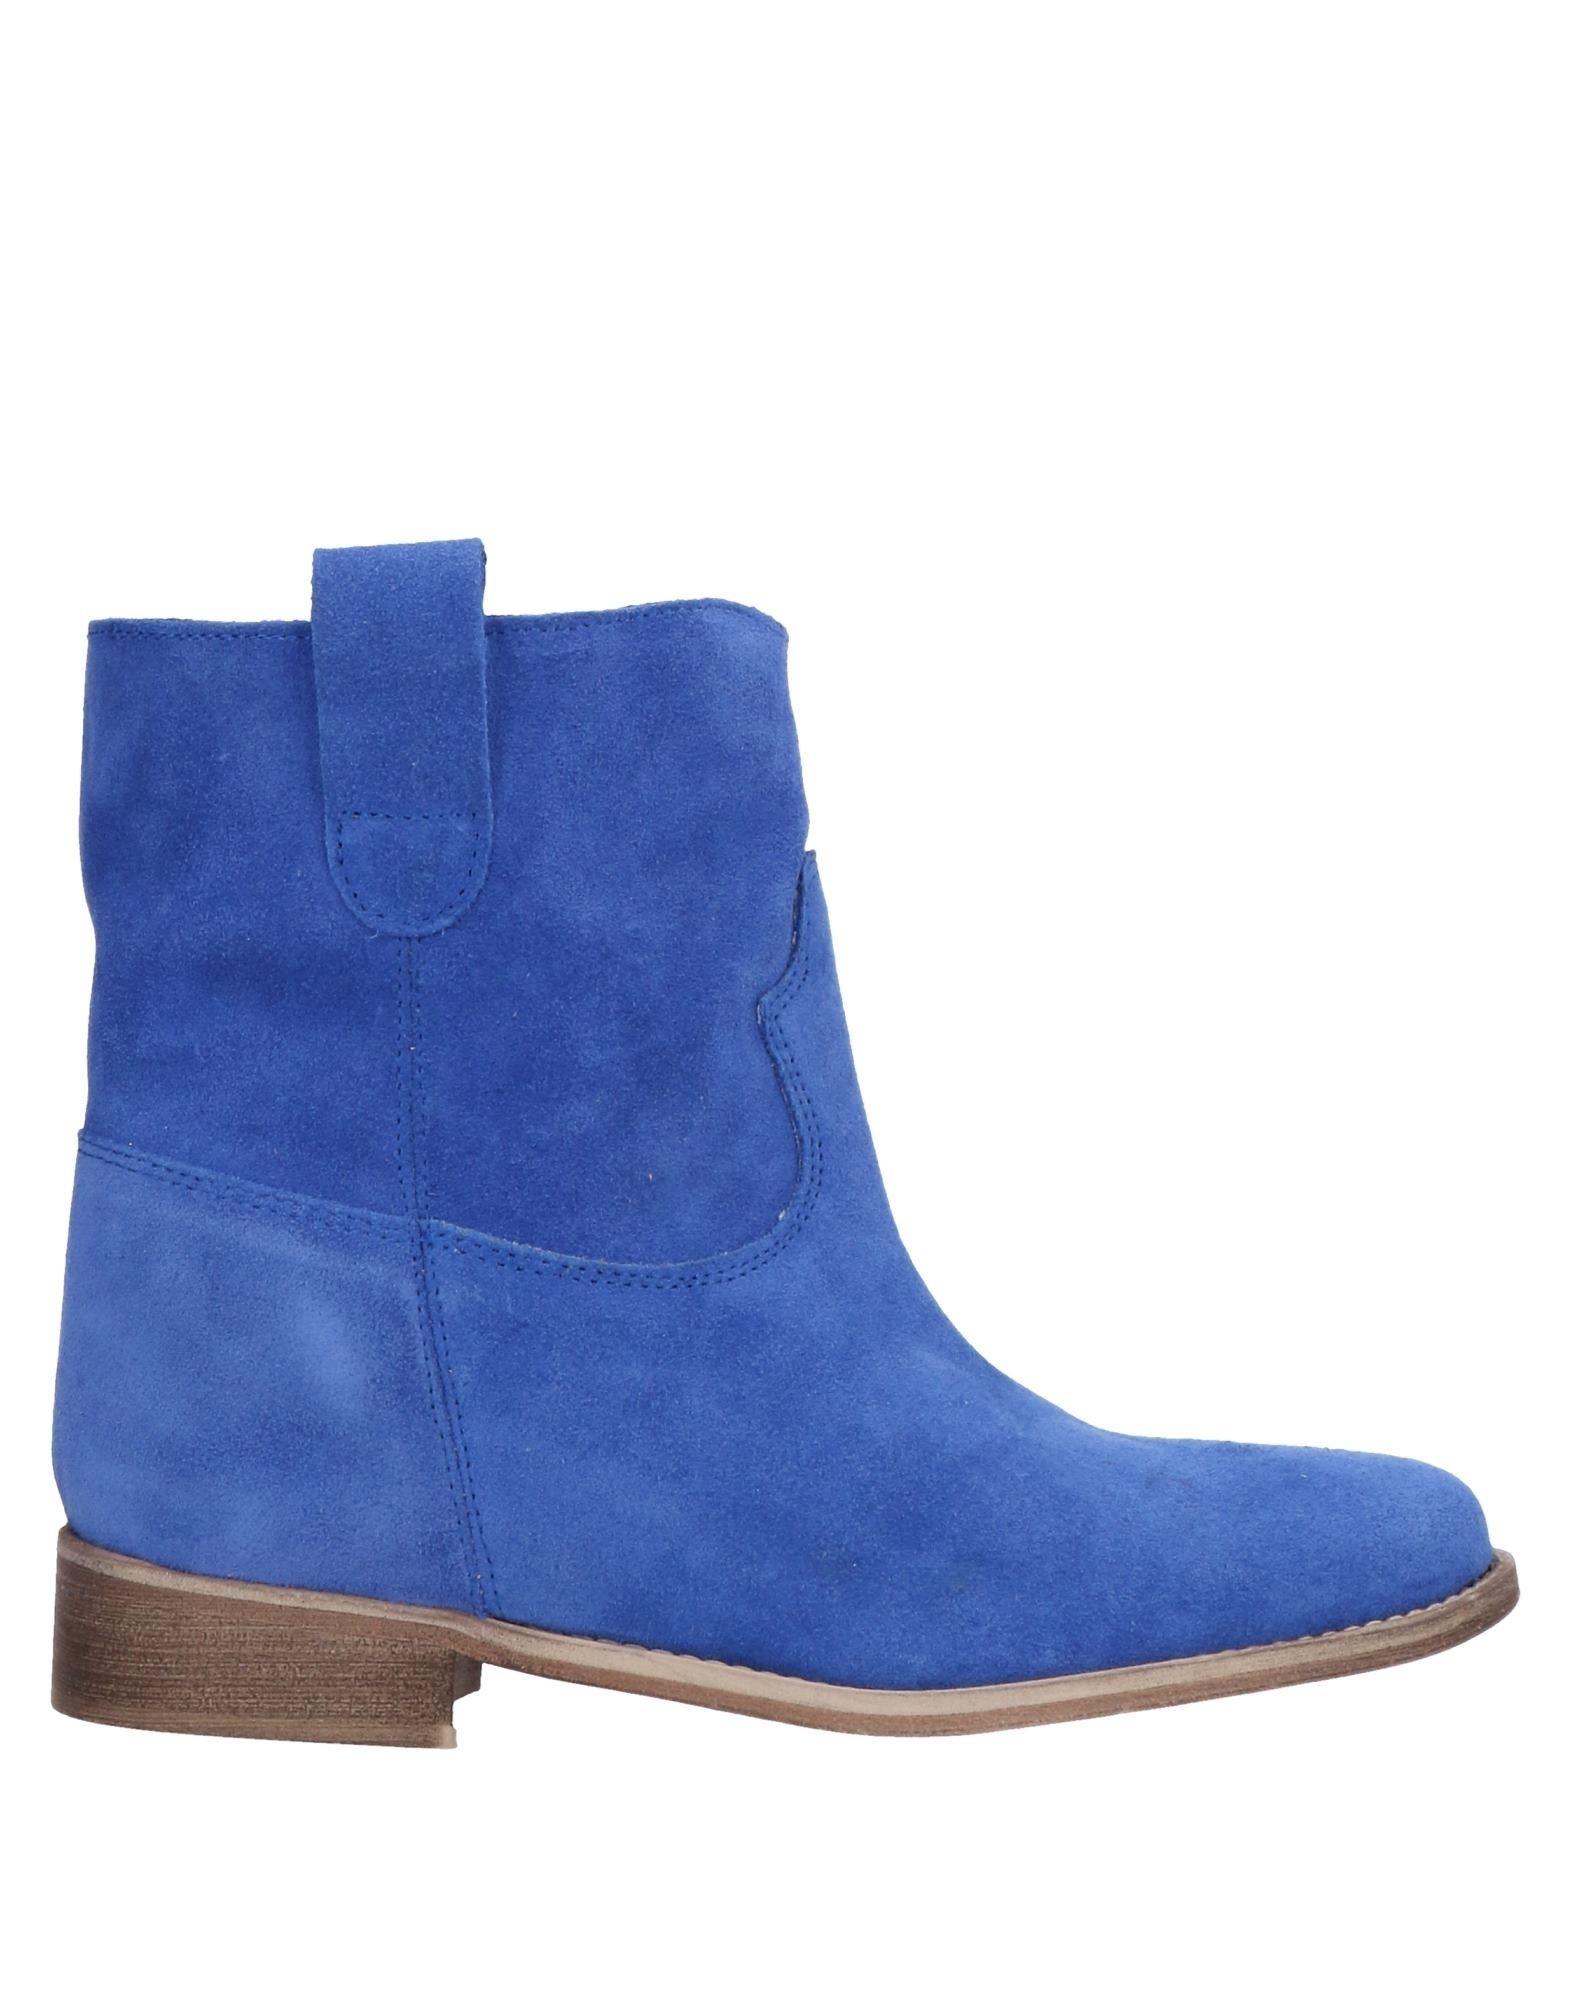 GISÉL MOIRÉ Leather Ankle Boots in Bright Blue (Blue) | Lyst